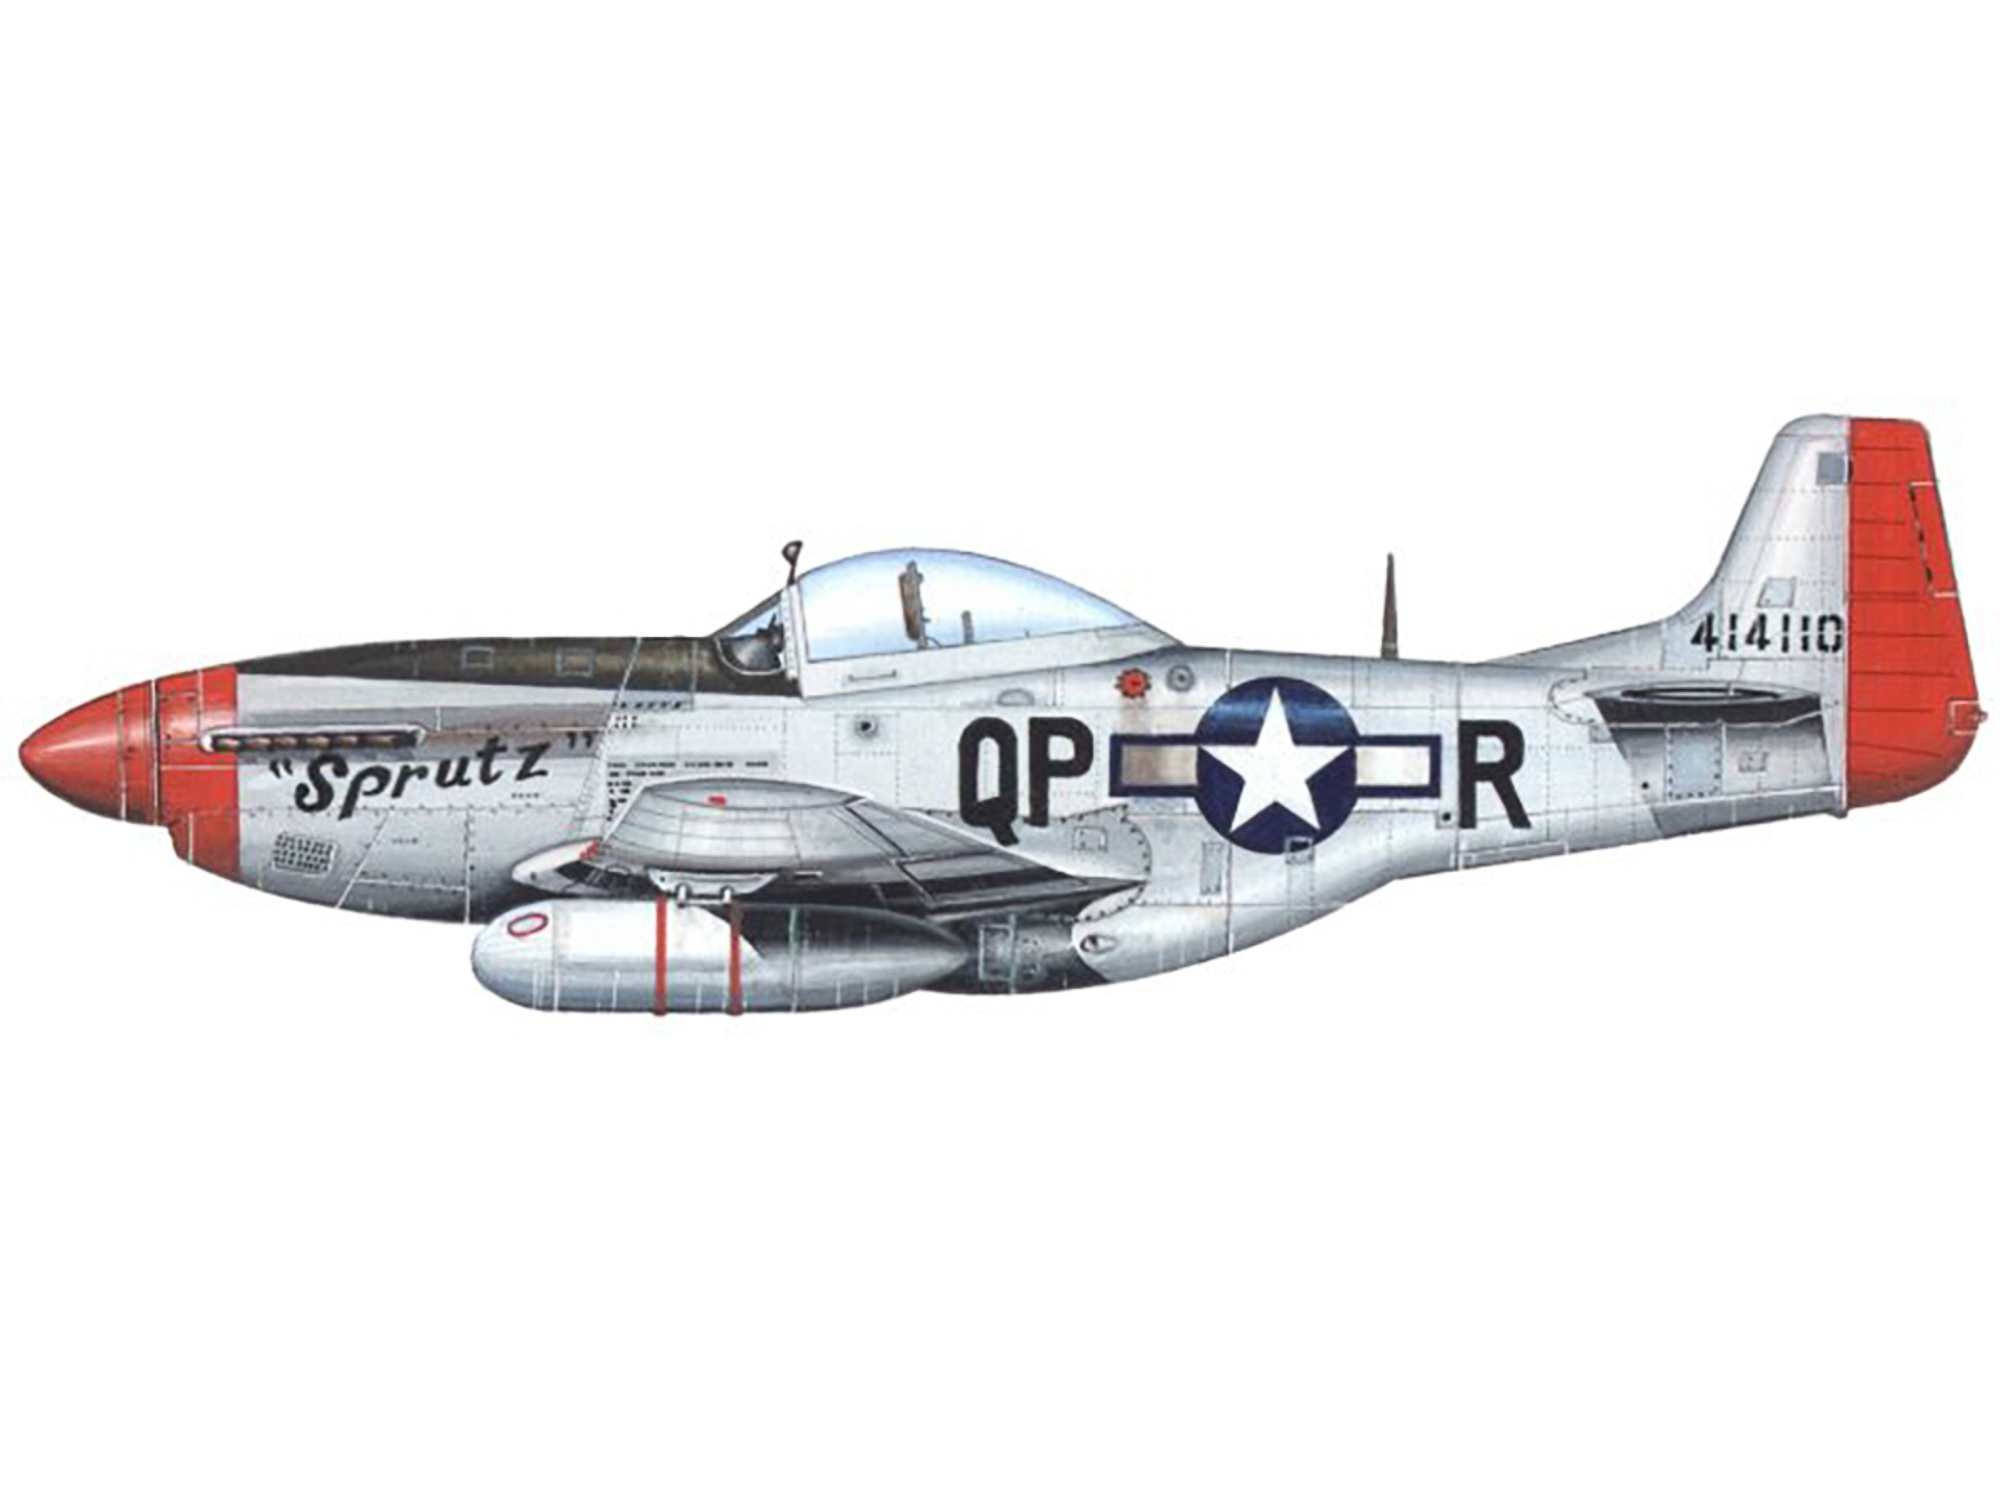 P-51D – Sprutz – 44-14110